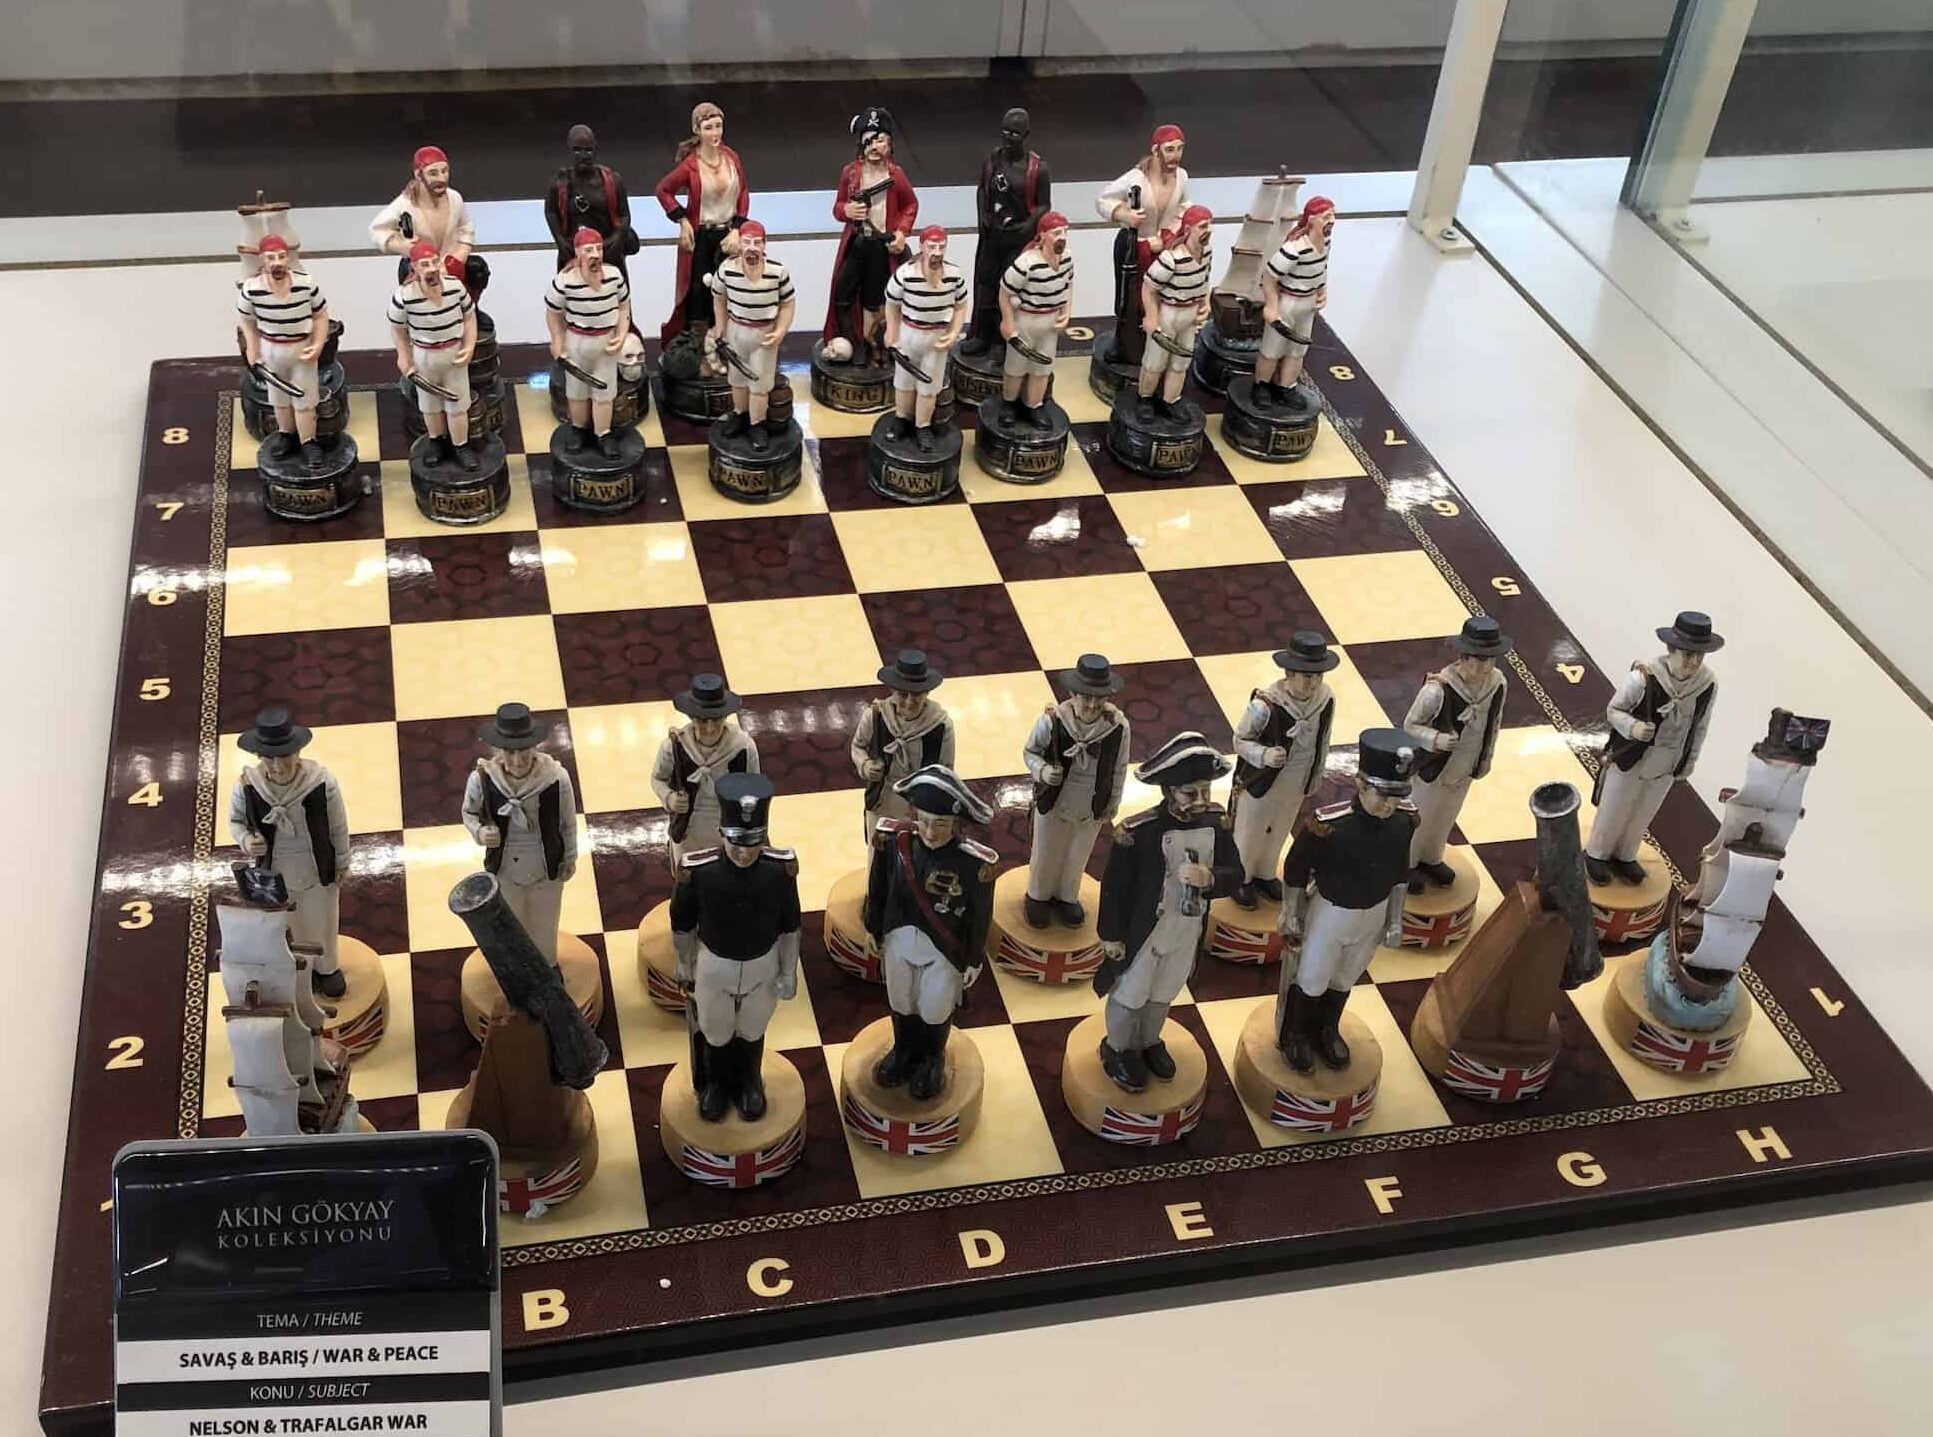 Battle of Trafalgar chess set (England) at the Gökyay Foundation Chess Museum in Ankara, Turkey